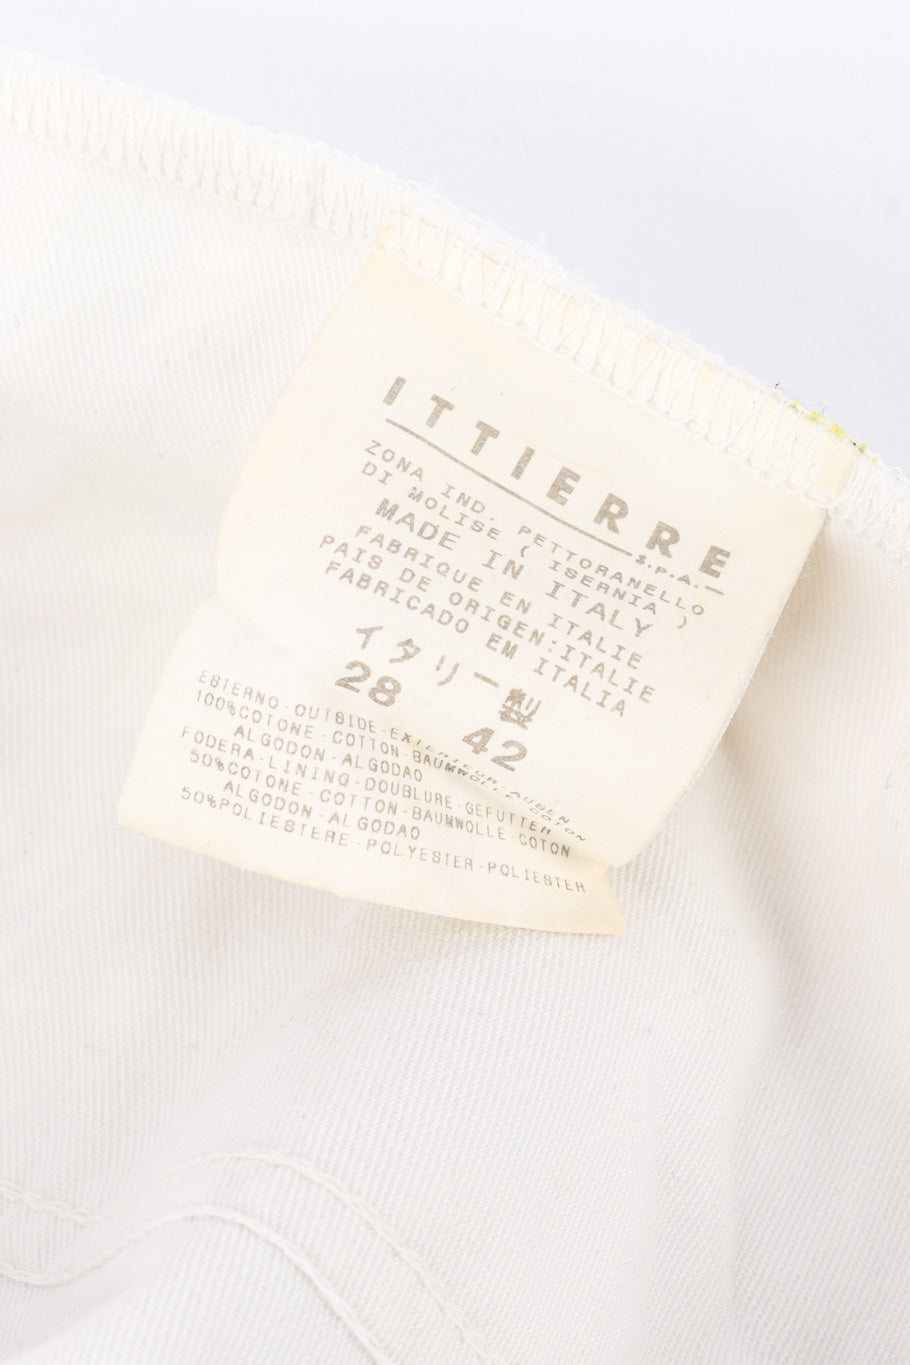 Vintage Dolce & Gabbana Make Love Painted Jeans origin label closeup @Recessla